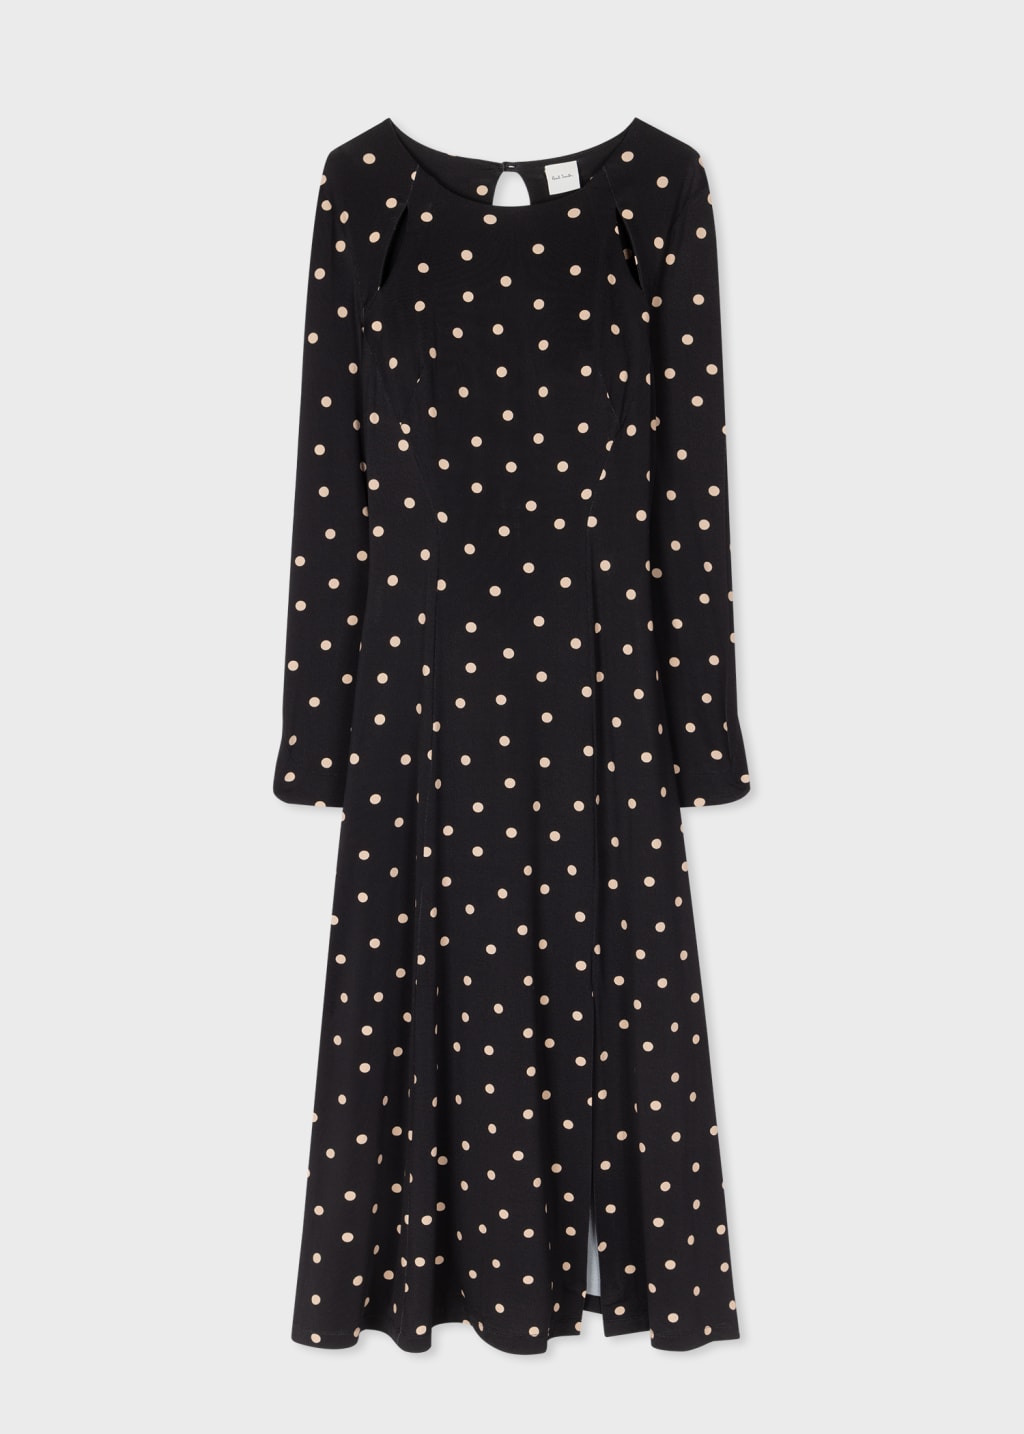 Model View - Women's Black Polka Dot Maxi Dress by Paul Smith